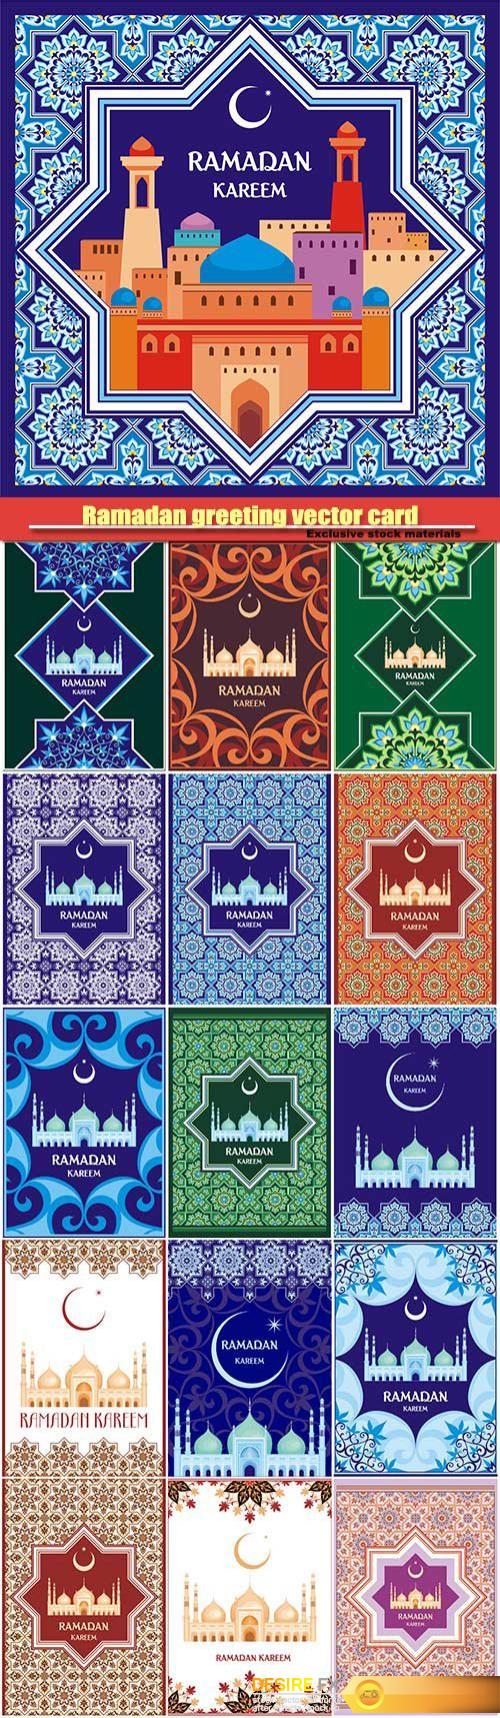 Ramadan greeting vector card